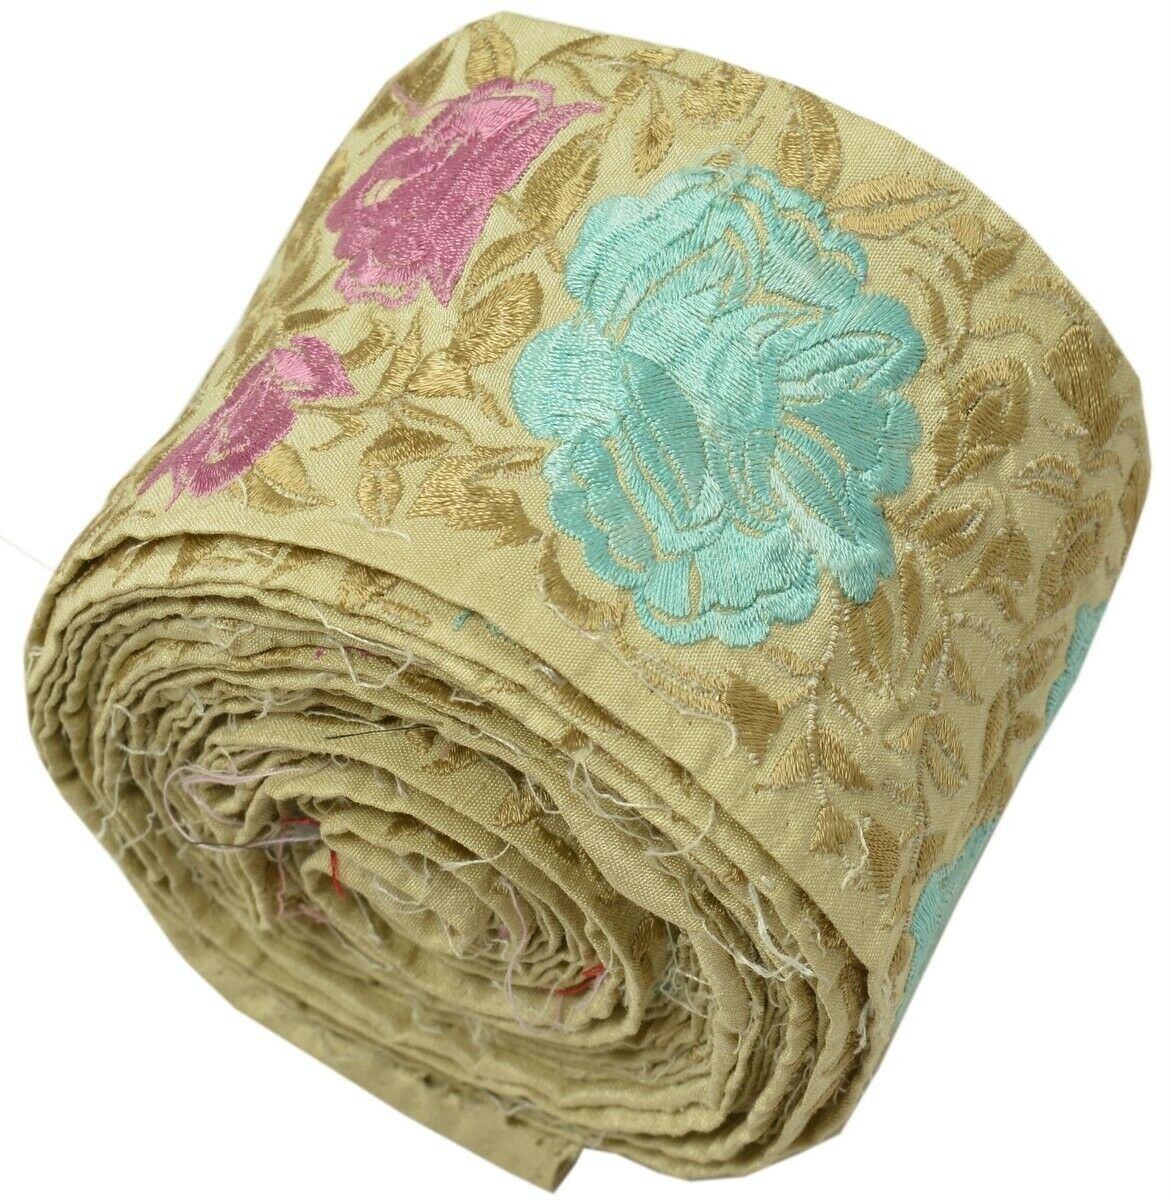 Vintage Sari Border Indian Craft Trim Embroidered Floral Cream Sew Ribbon Lace